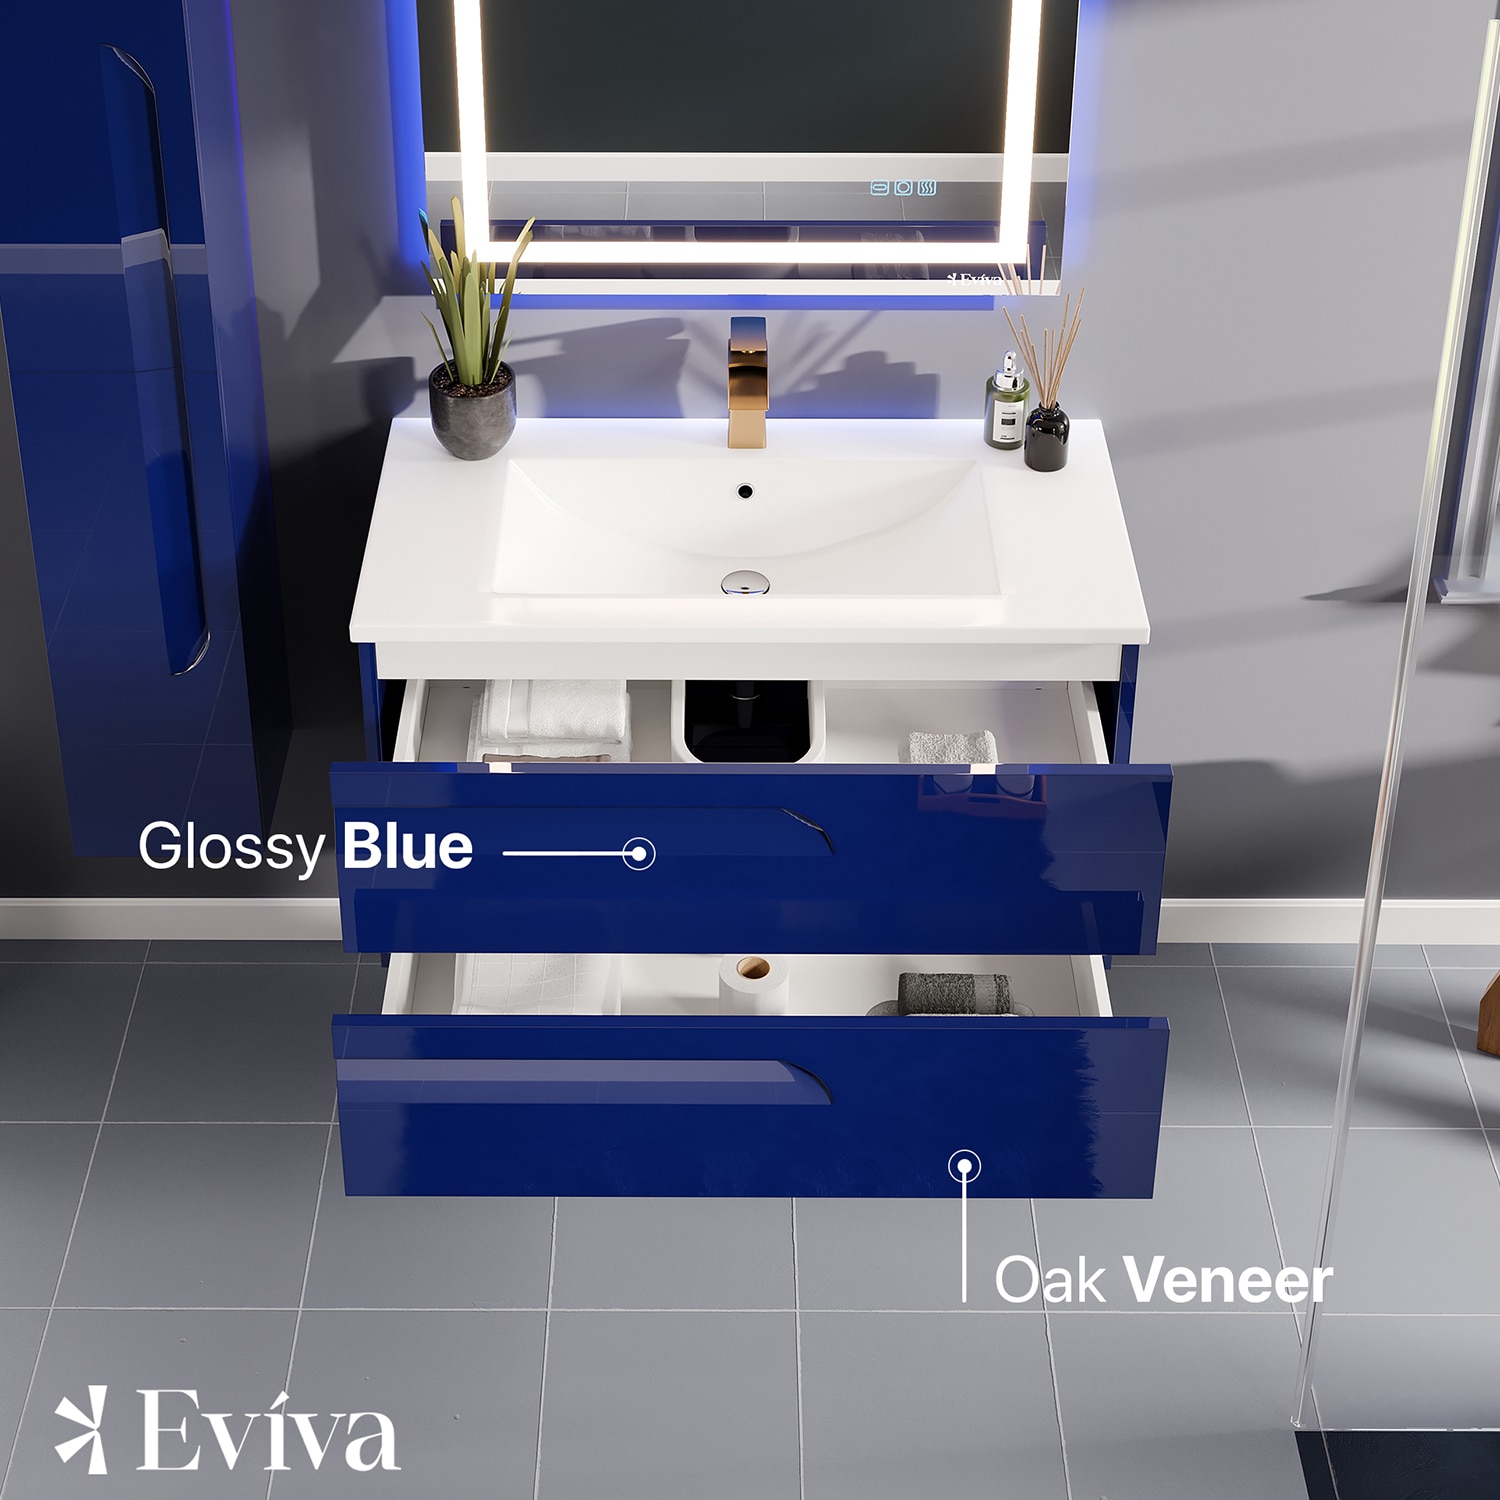 Eviva Joyous 39 In Blue Single Sink Floating Bathroom Vanity With White Porcelain Top In The